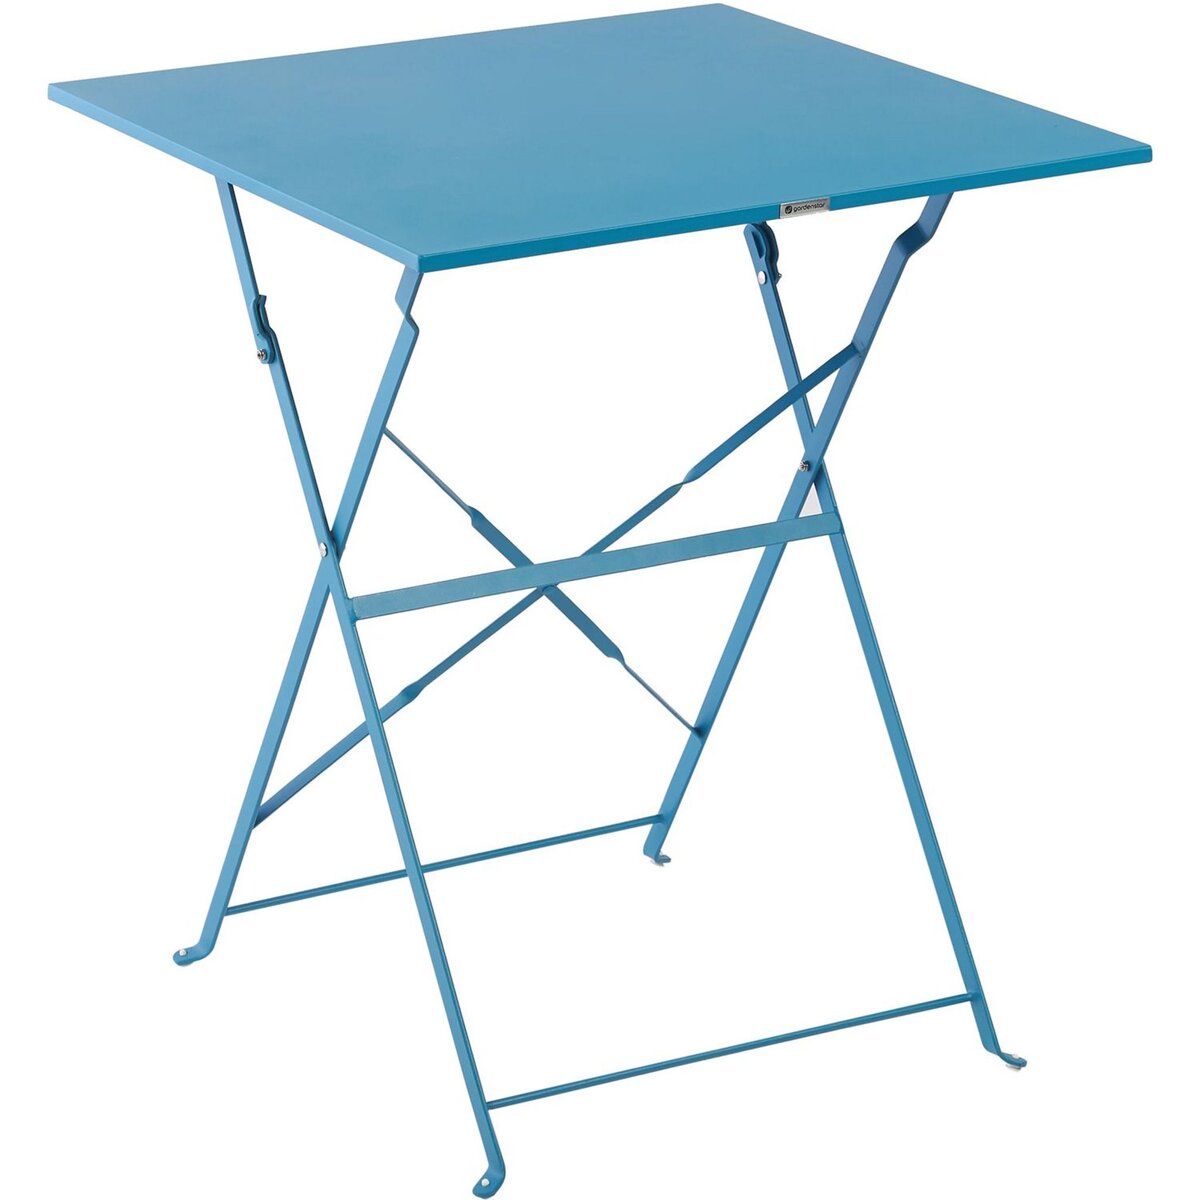 GARDENSTAR Table de jardin pliante - 2 places - Acier - Bleu azur